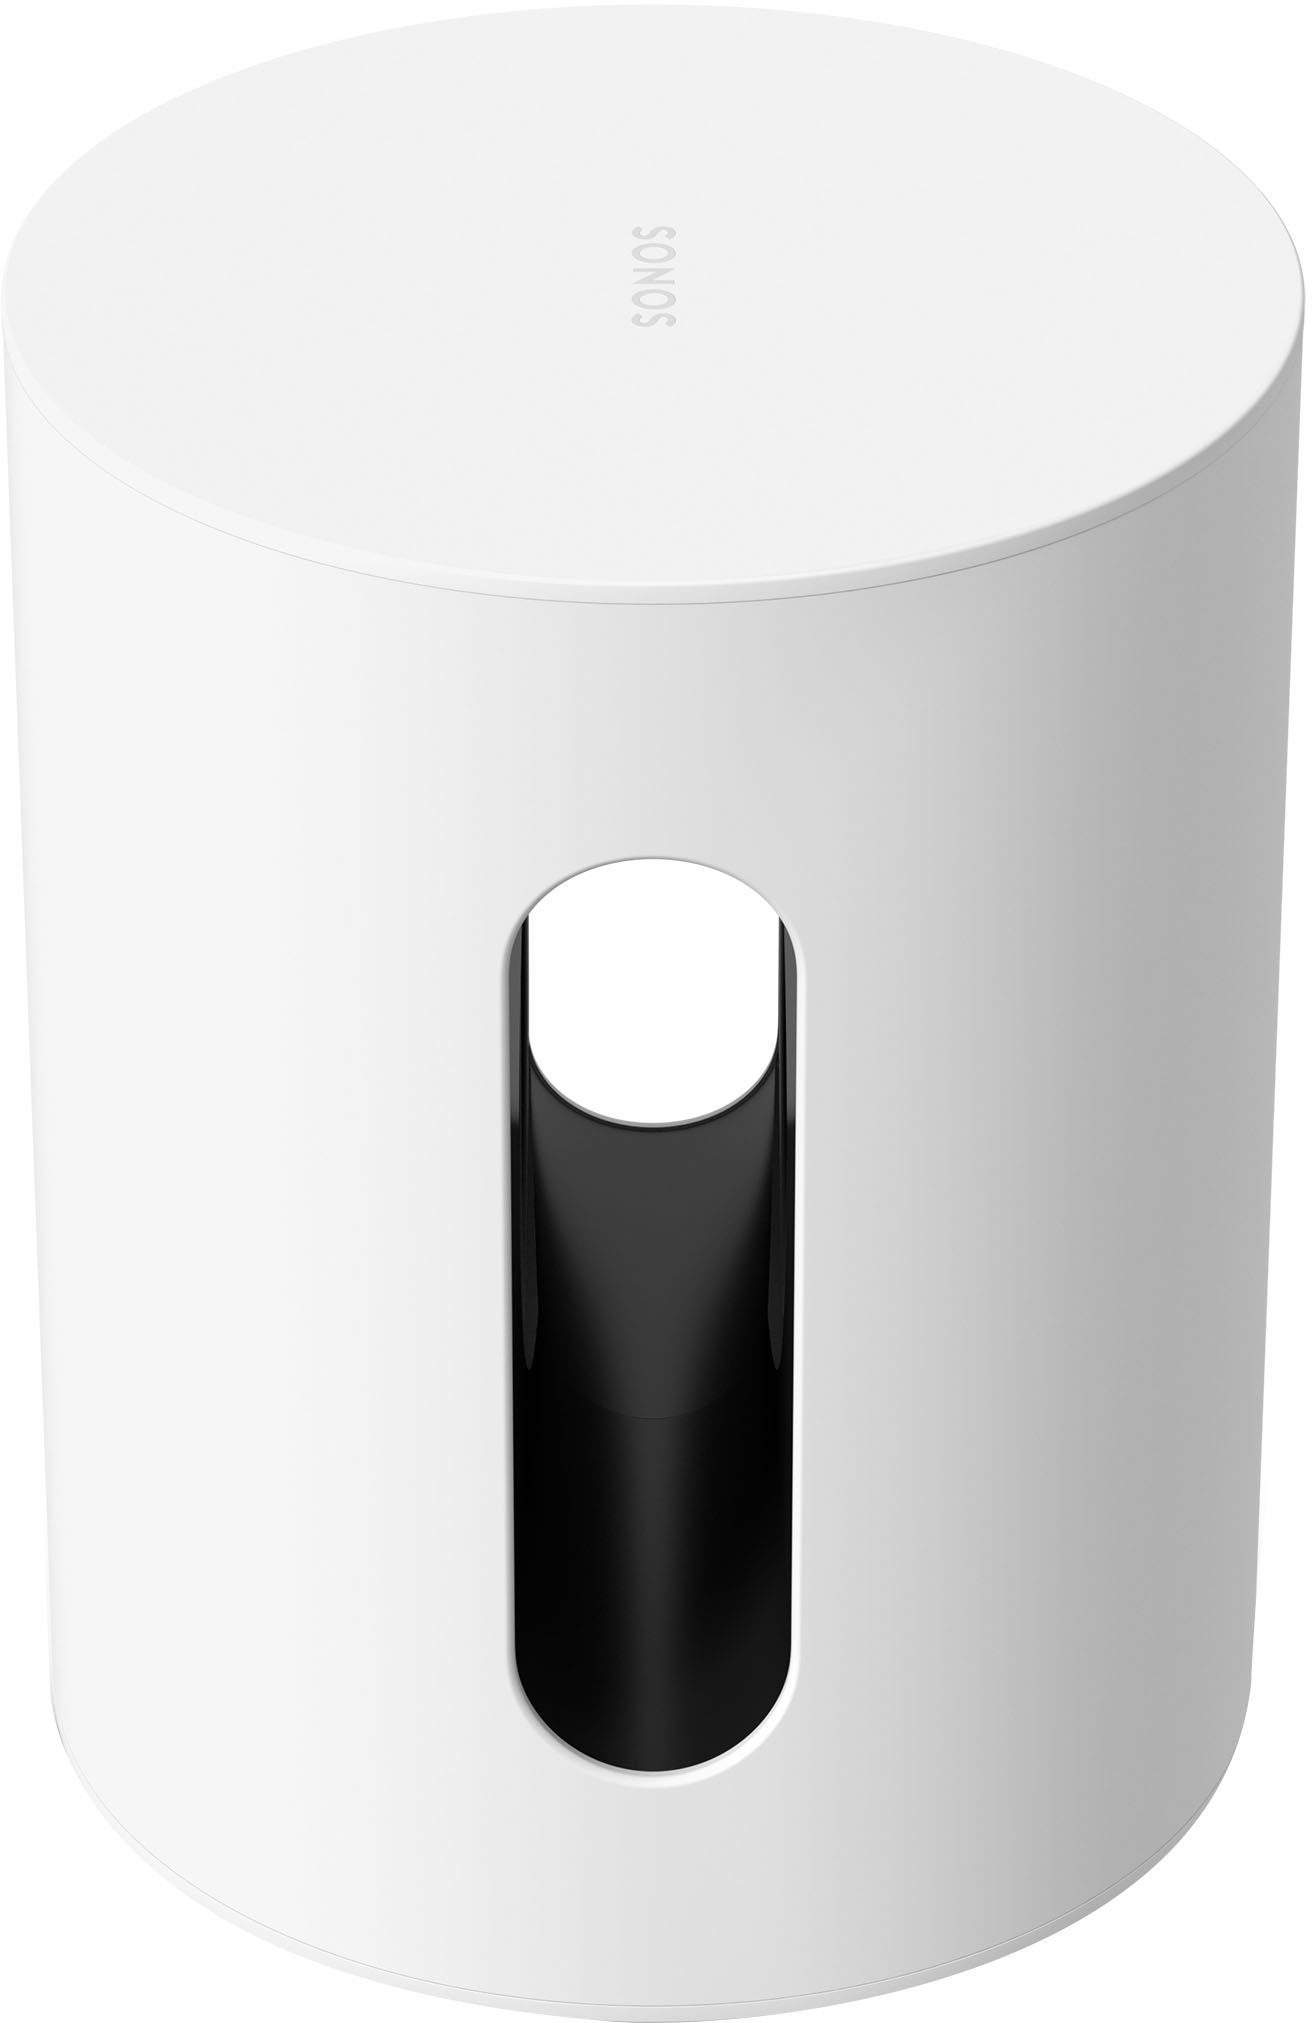 Angle View: Sonos - Sub Mini Dual 6" Wifi Subwoofer - White